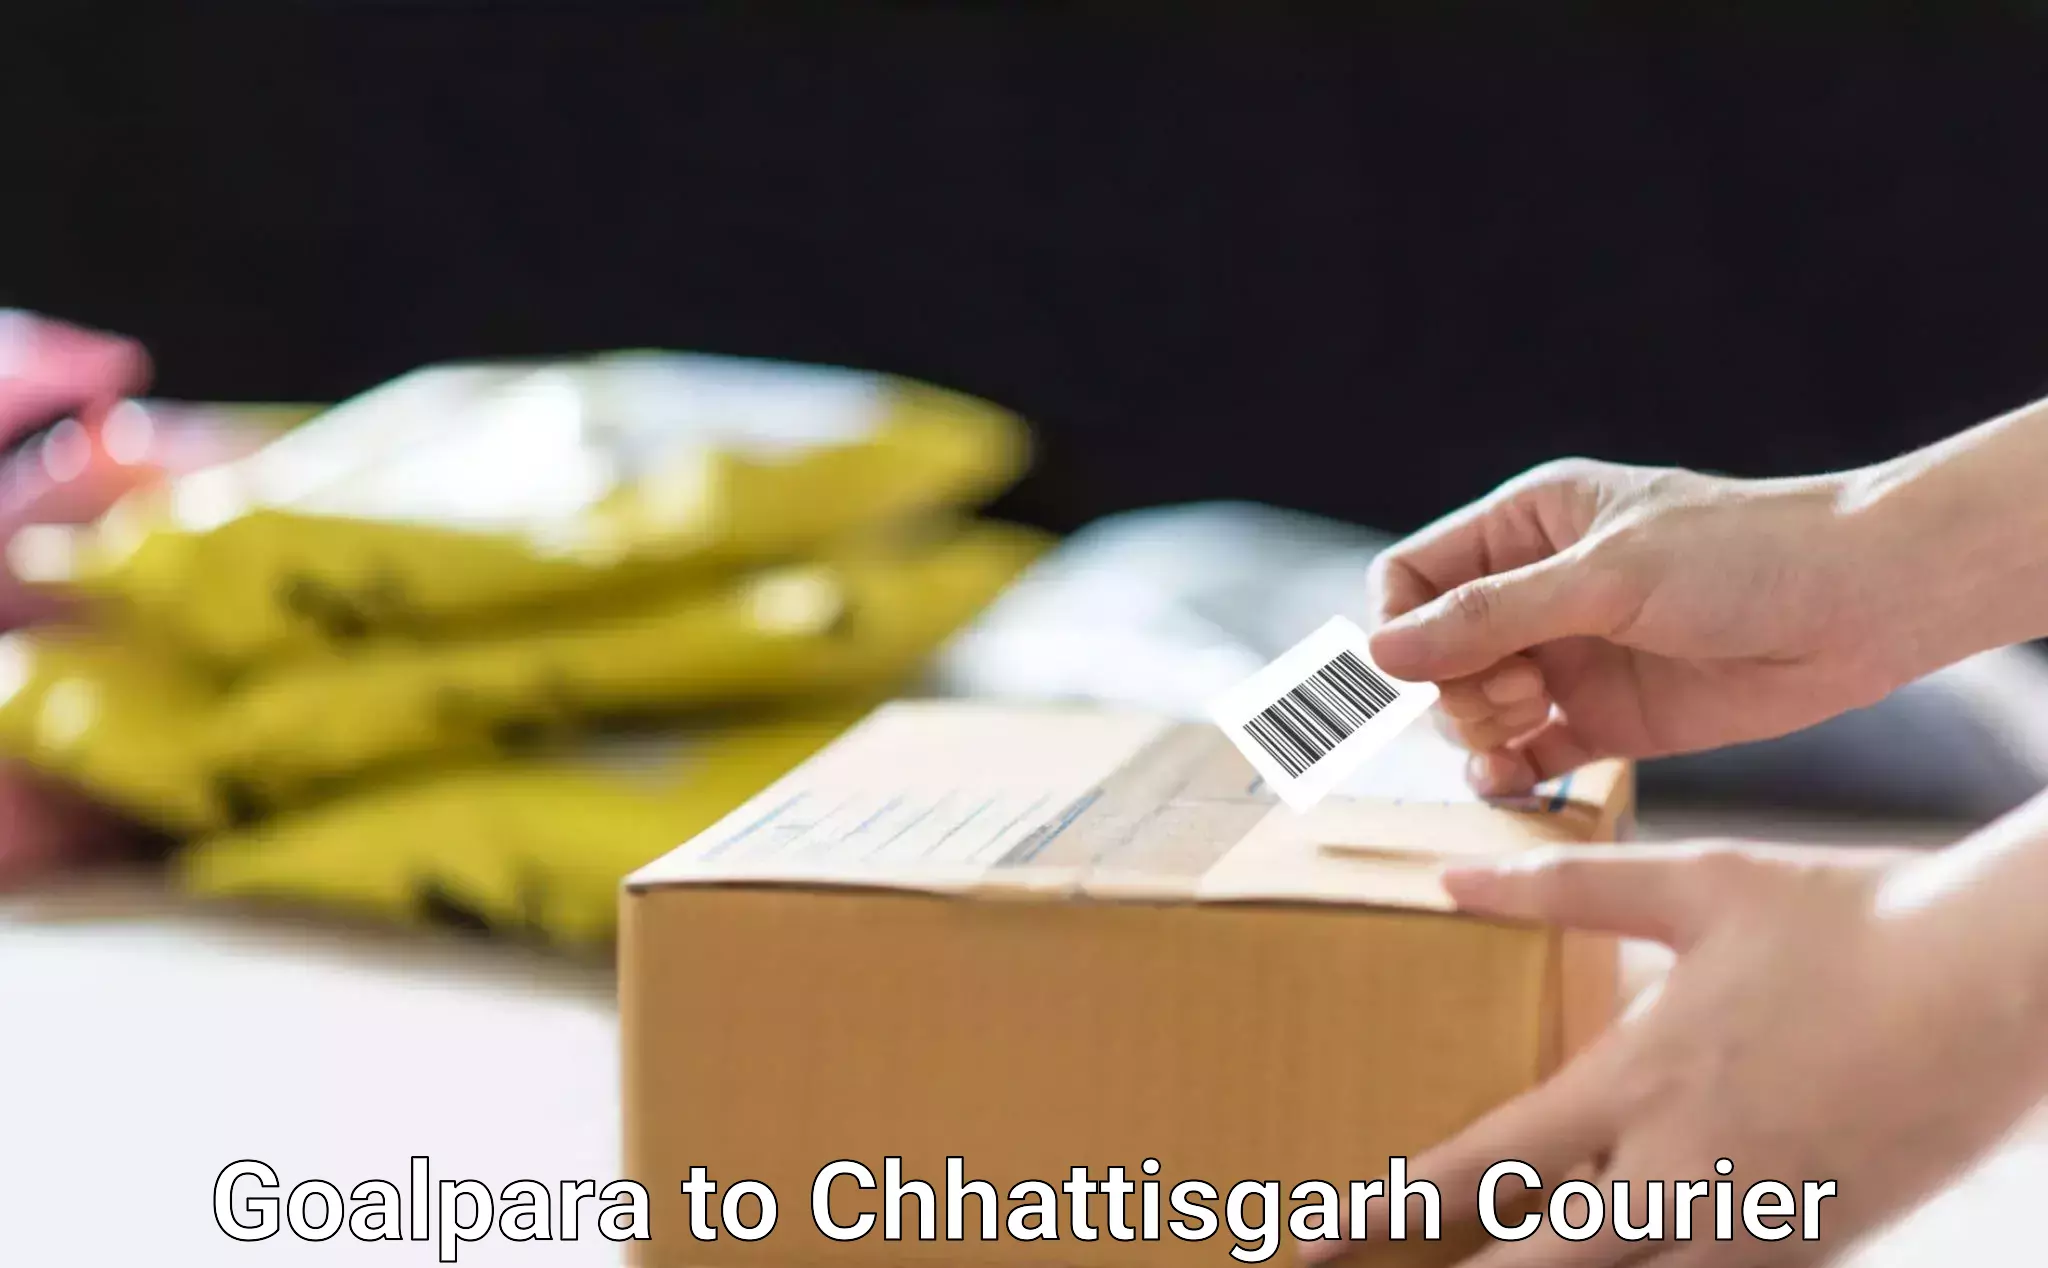 Efficient freight service Goalpara to Chhattisgarh